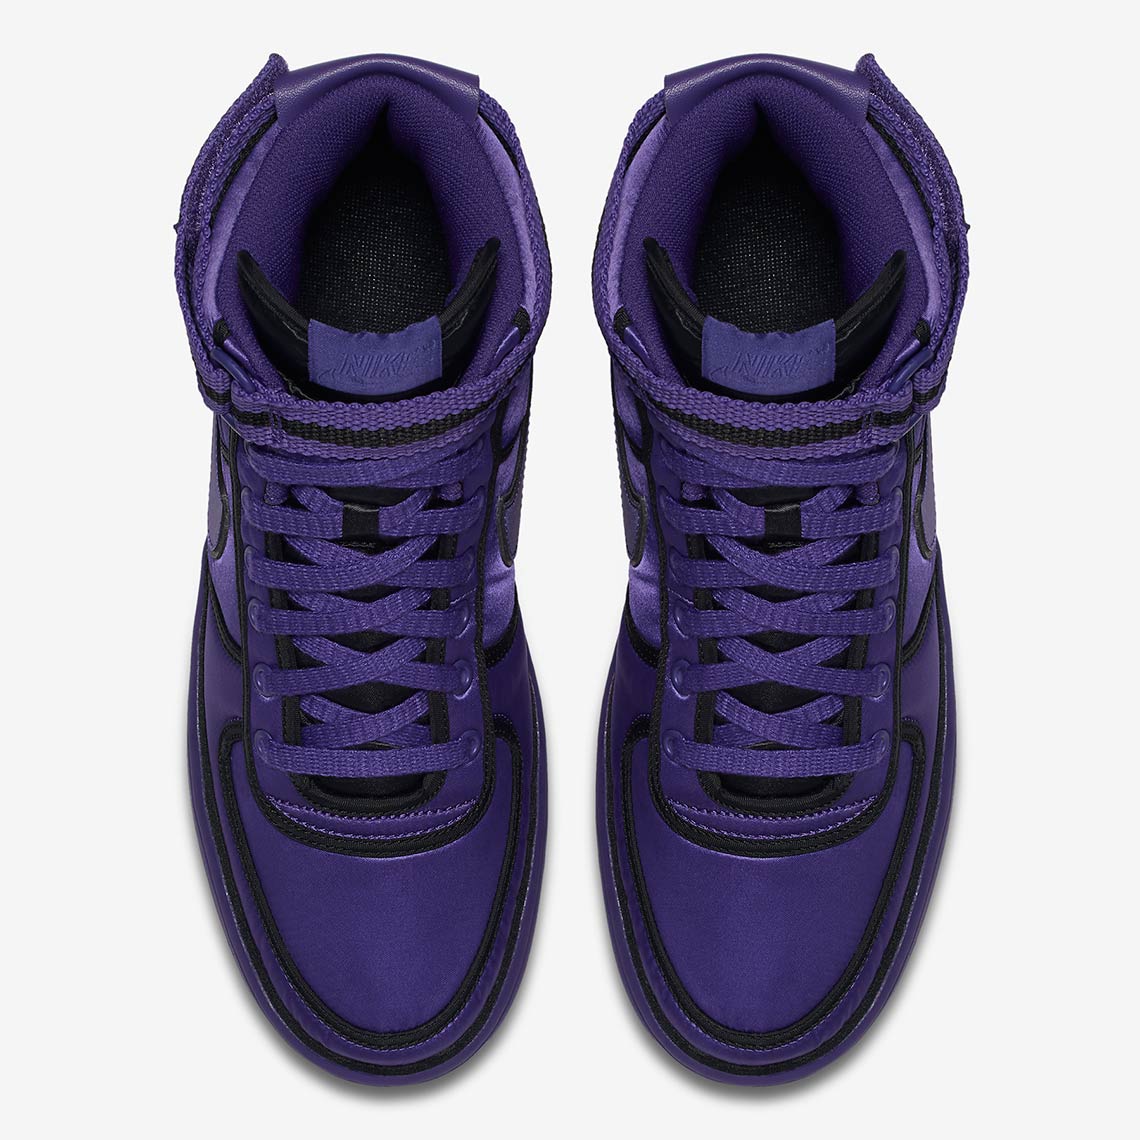 Nike Vandal High Court Purple Aq2176 500 2